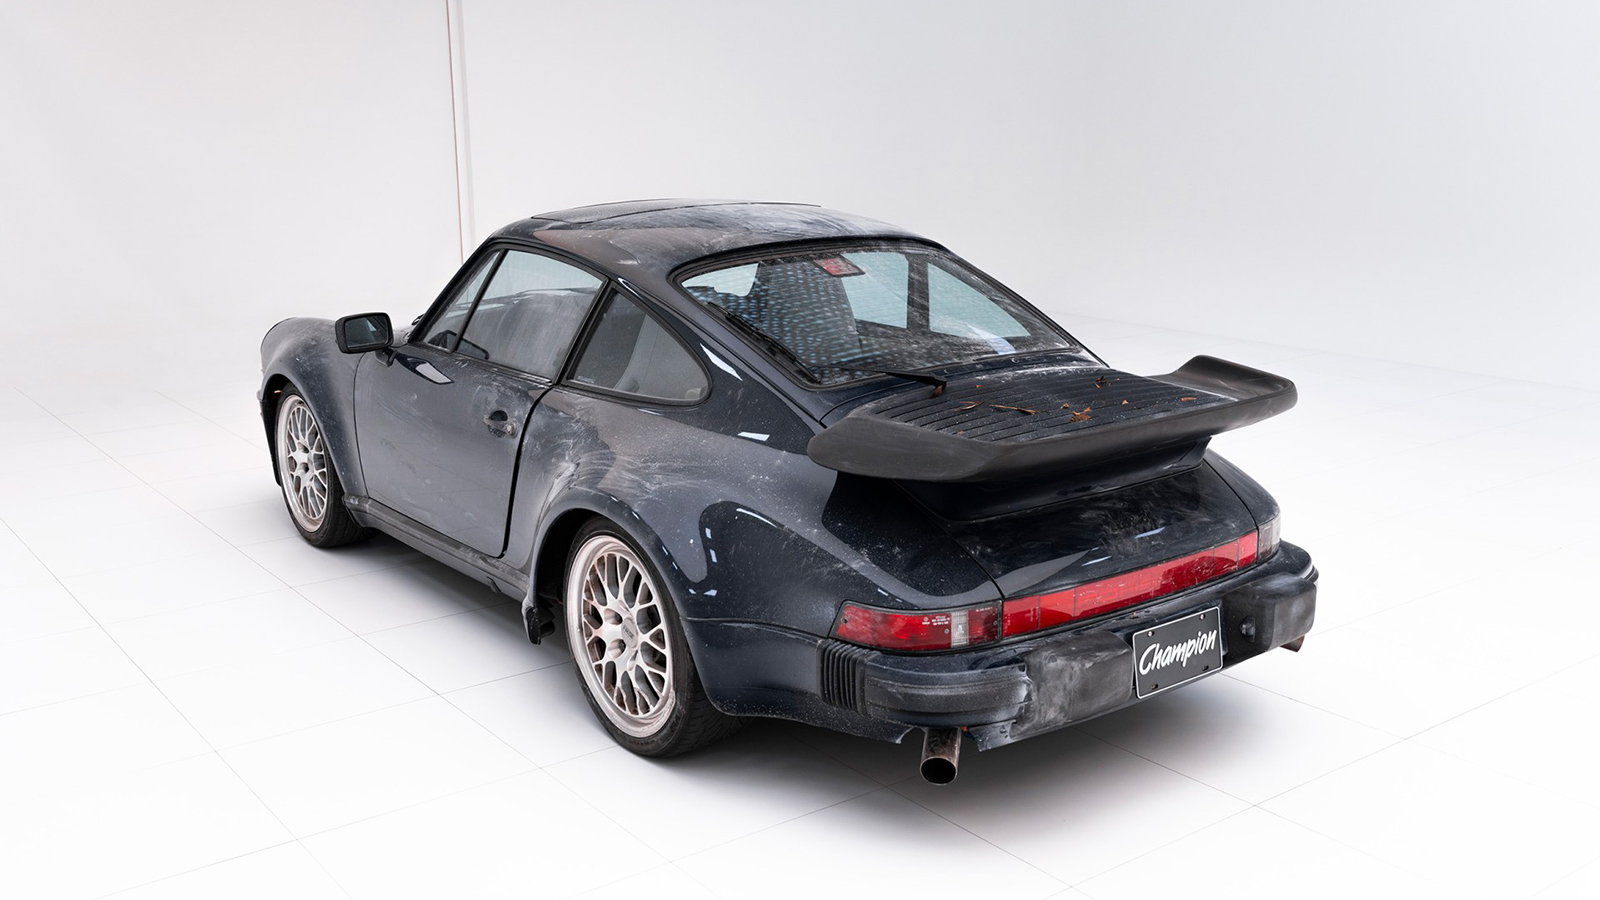 Porsche Classic Restoration Challenge Winner is Flawless 930 Turbo